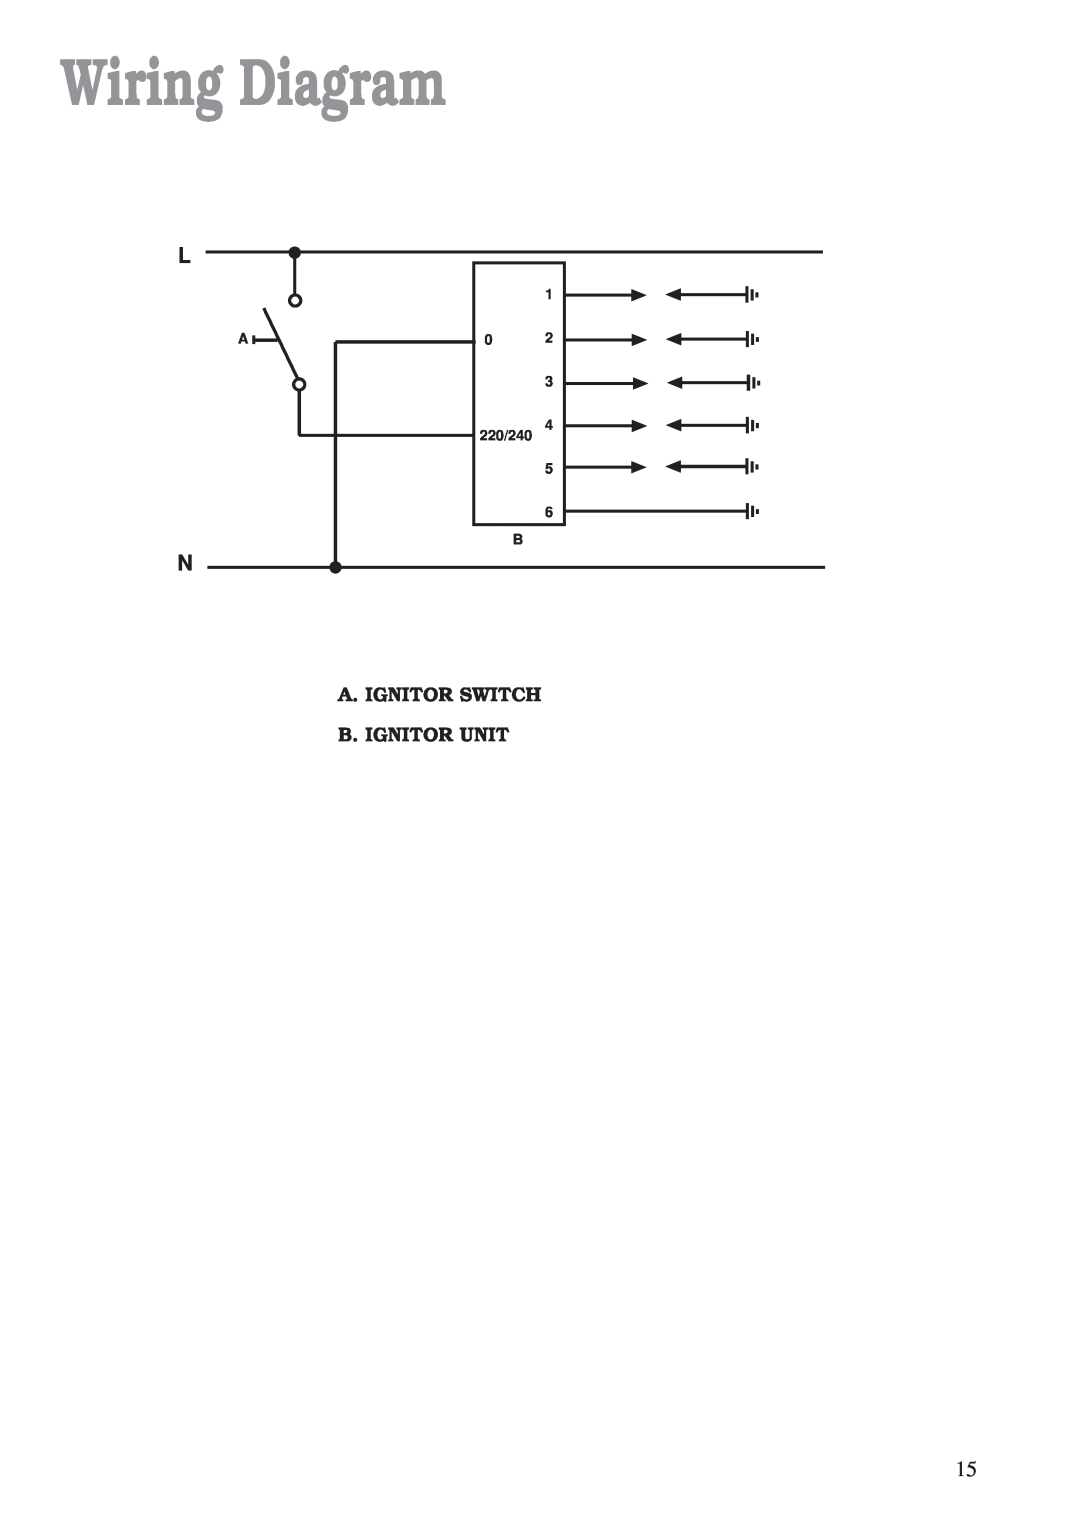 Zanussi ZGF 982 manual Wiring Diagram, A. Ignitor Switch B. Ignitor Unit, 220/240 B 